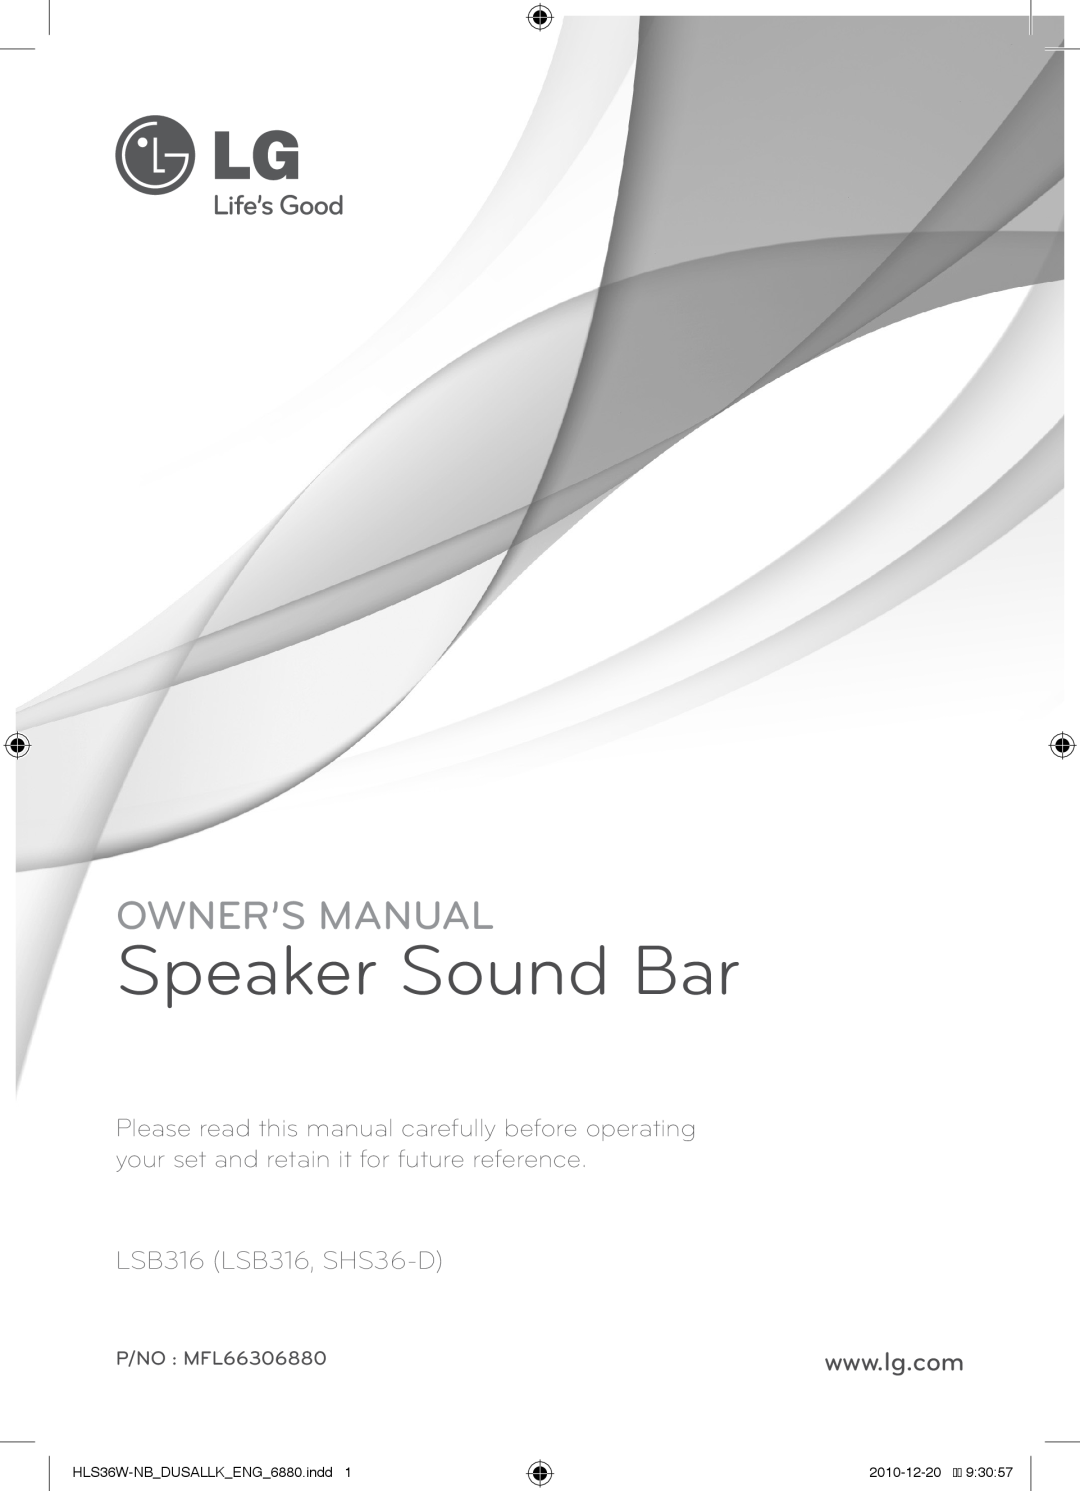 LG Electronics owner manual Speaker Sound Bar, LSB316 LSB316, SHS36-D, P/NO MFL66306880, 2010-12-209 